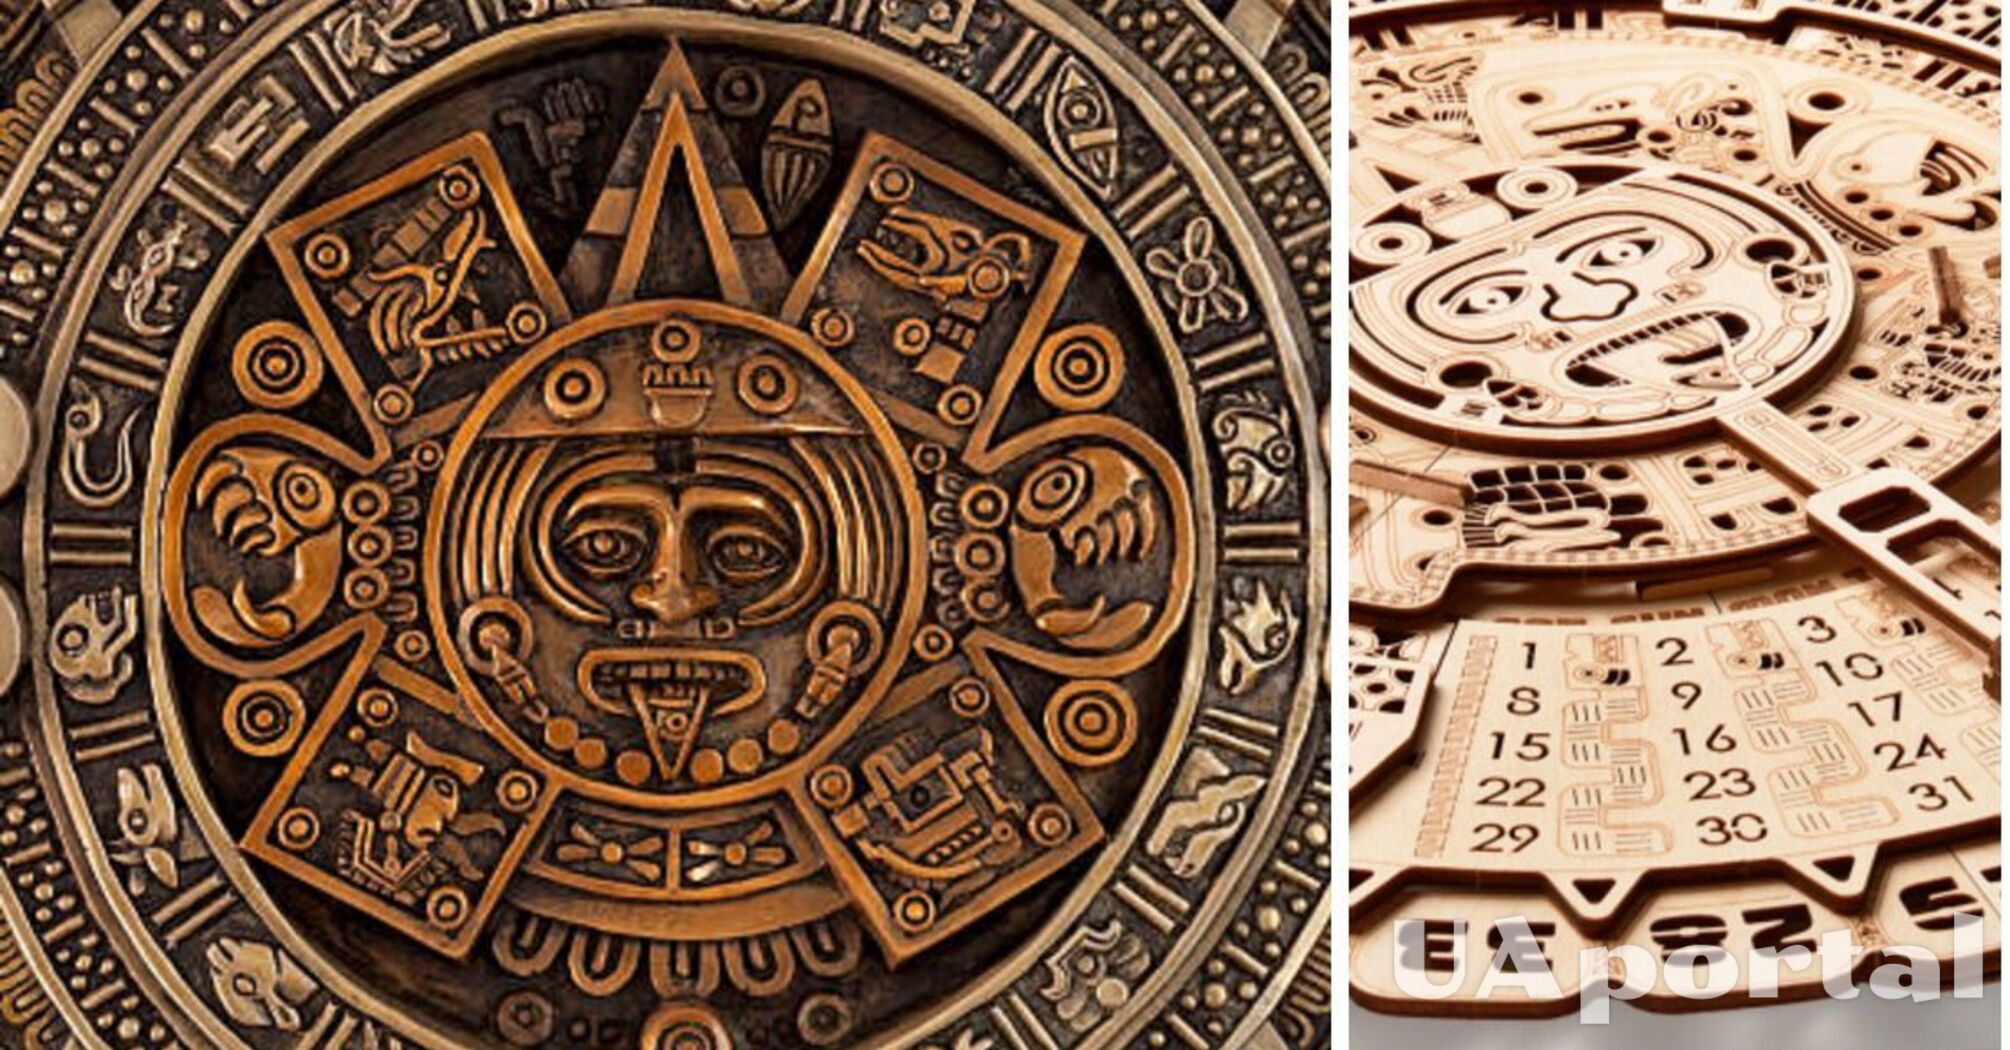 Scientists make a breakthrough in understanding the Mayan calendar: how it works